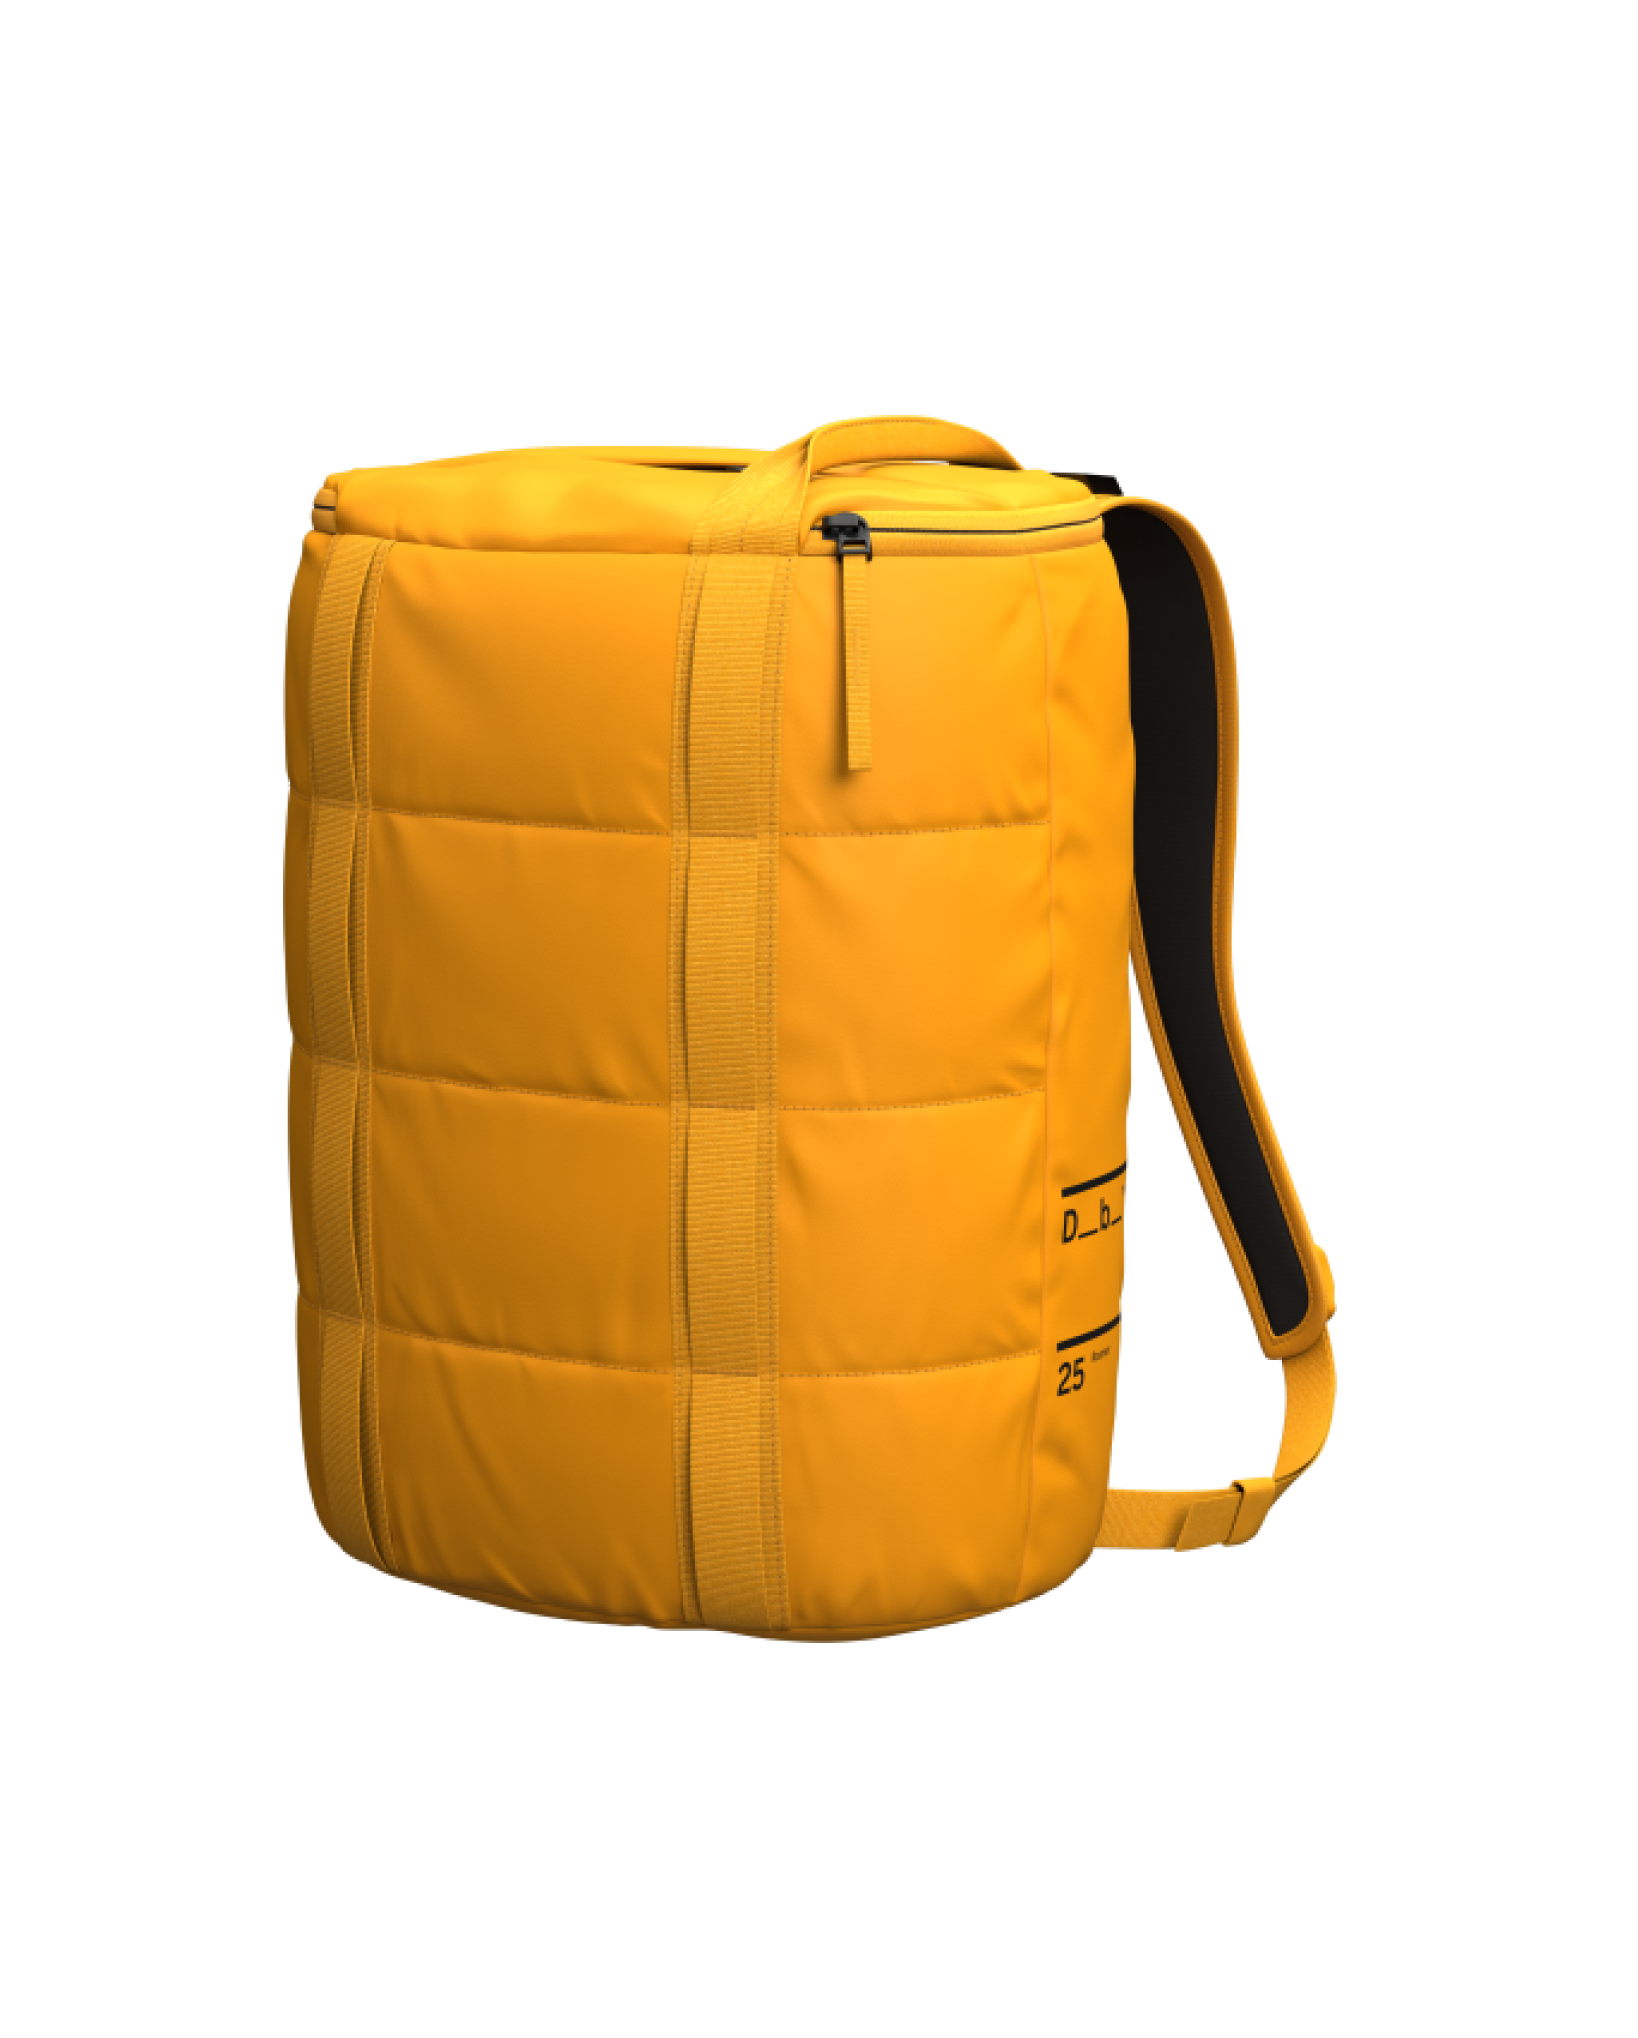 Roamer Duffel Backpack 25L Parhelion Orange - Parhelion Orange